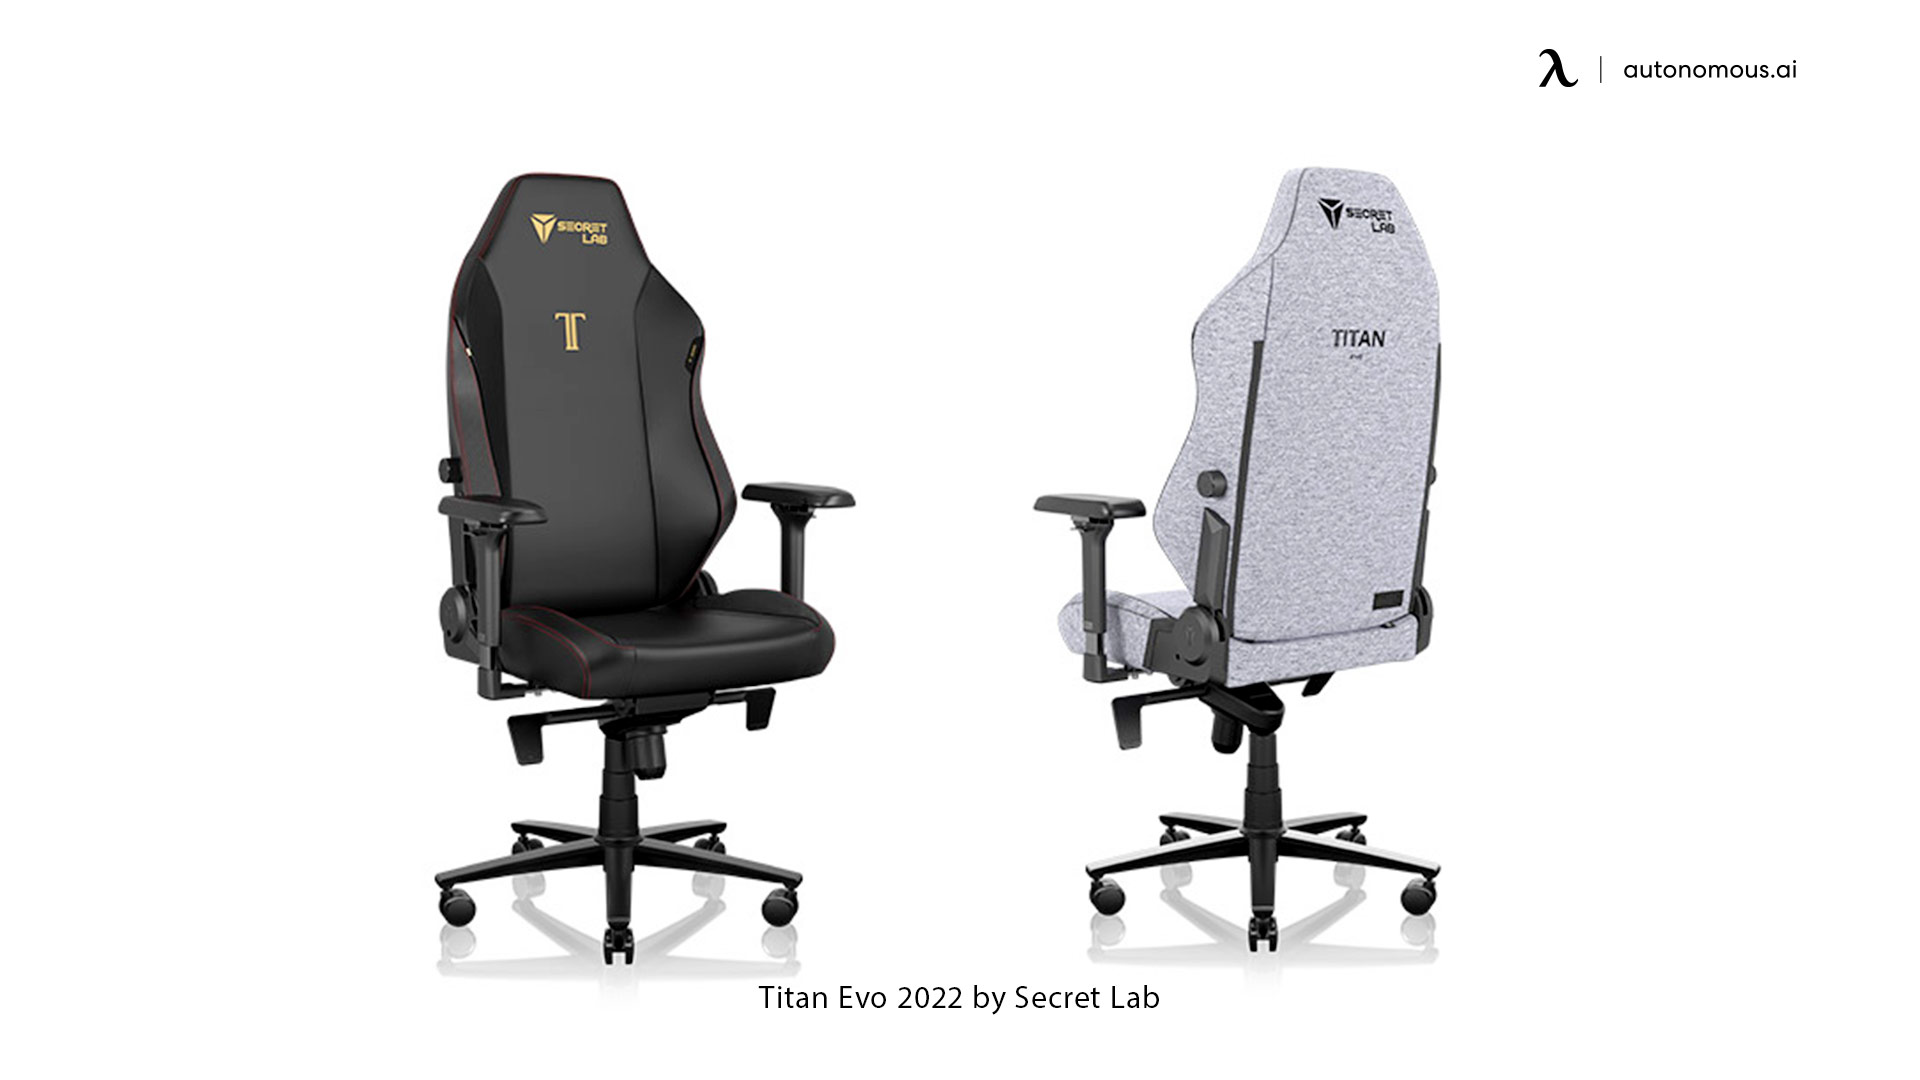 Secretlab Titan Evo 2022 racing gaming chair